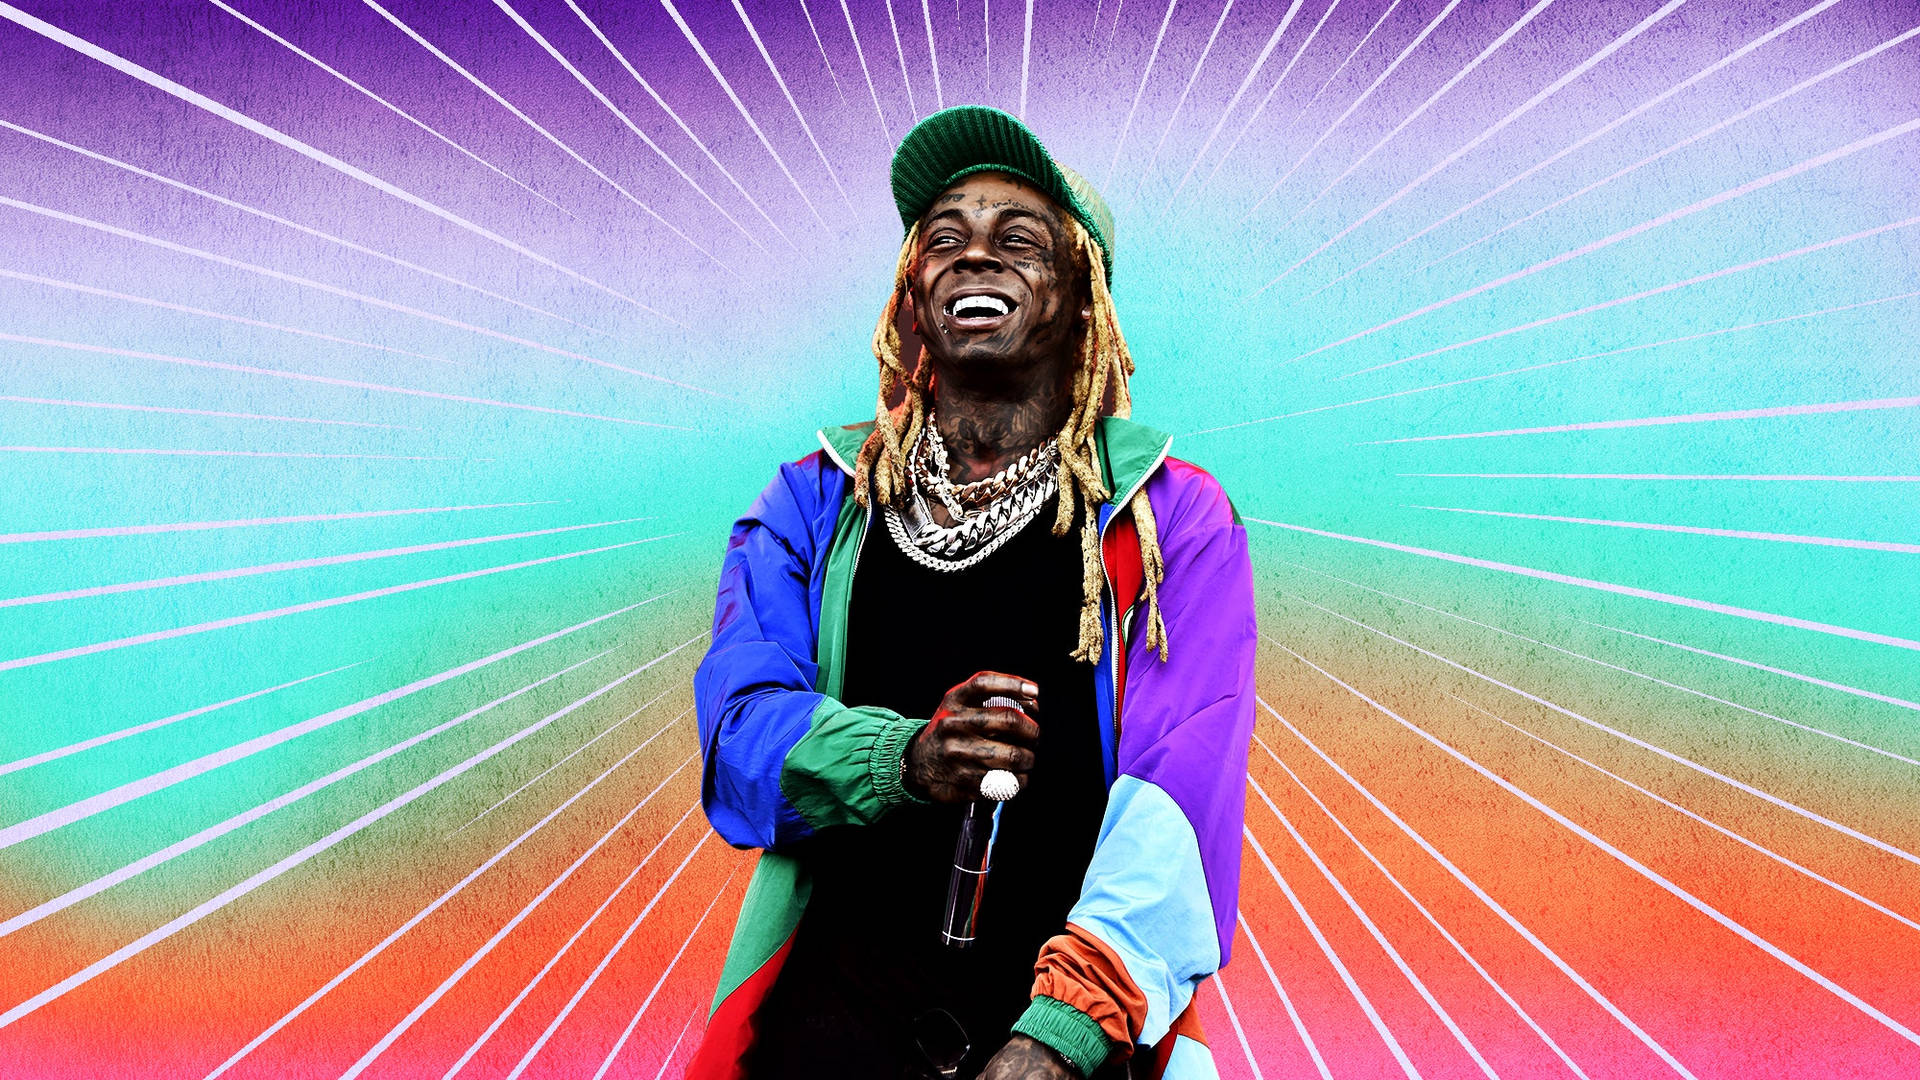 Lil Wayne Colorful Background Wallpaper